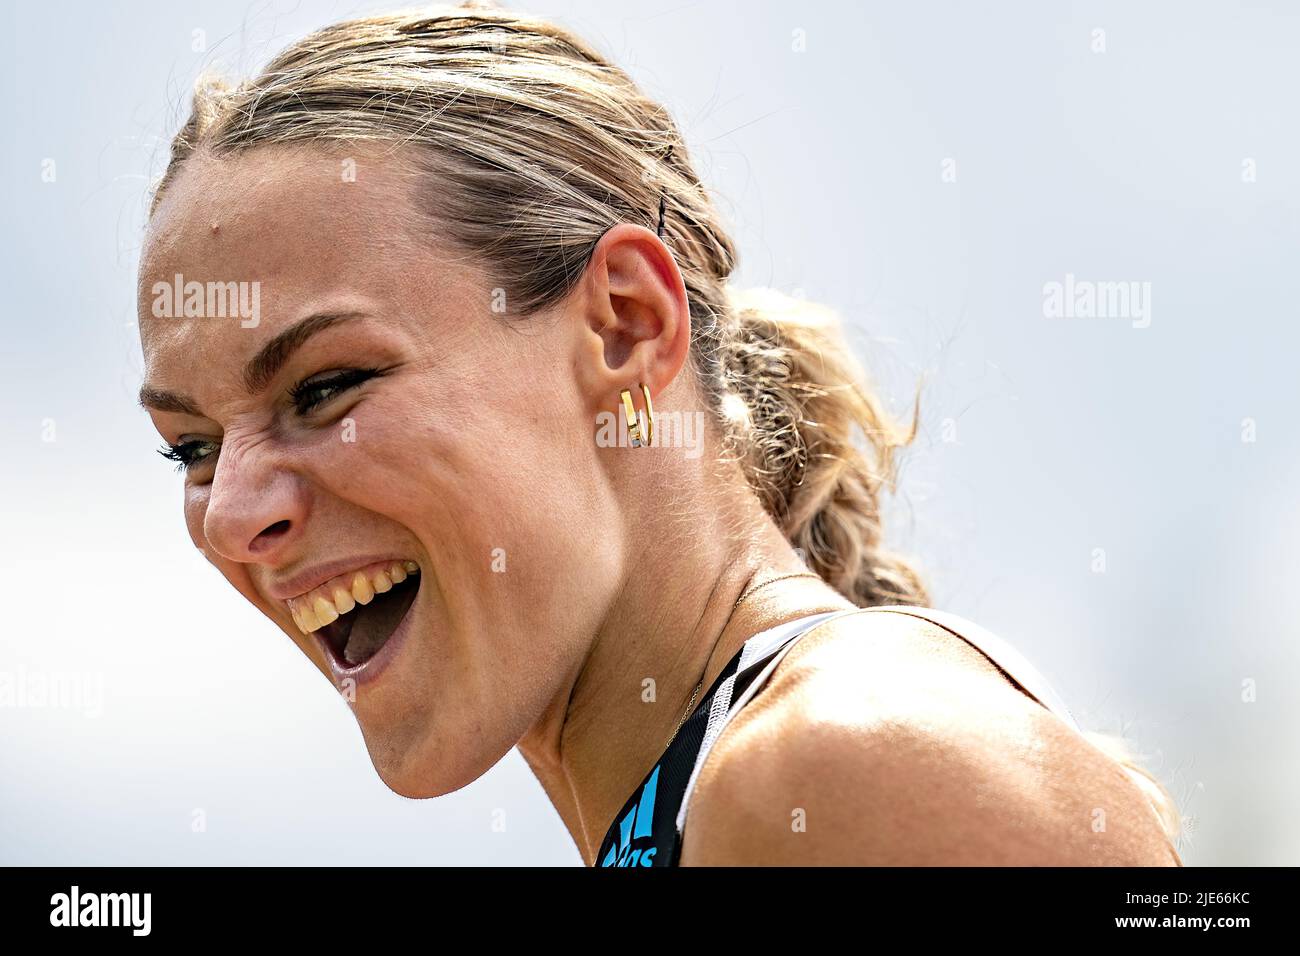 Apeldoorn Athlete Lieke Klaver During The Meters Event At The